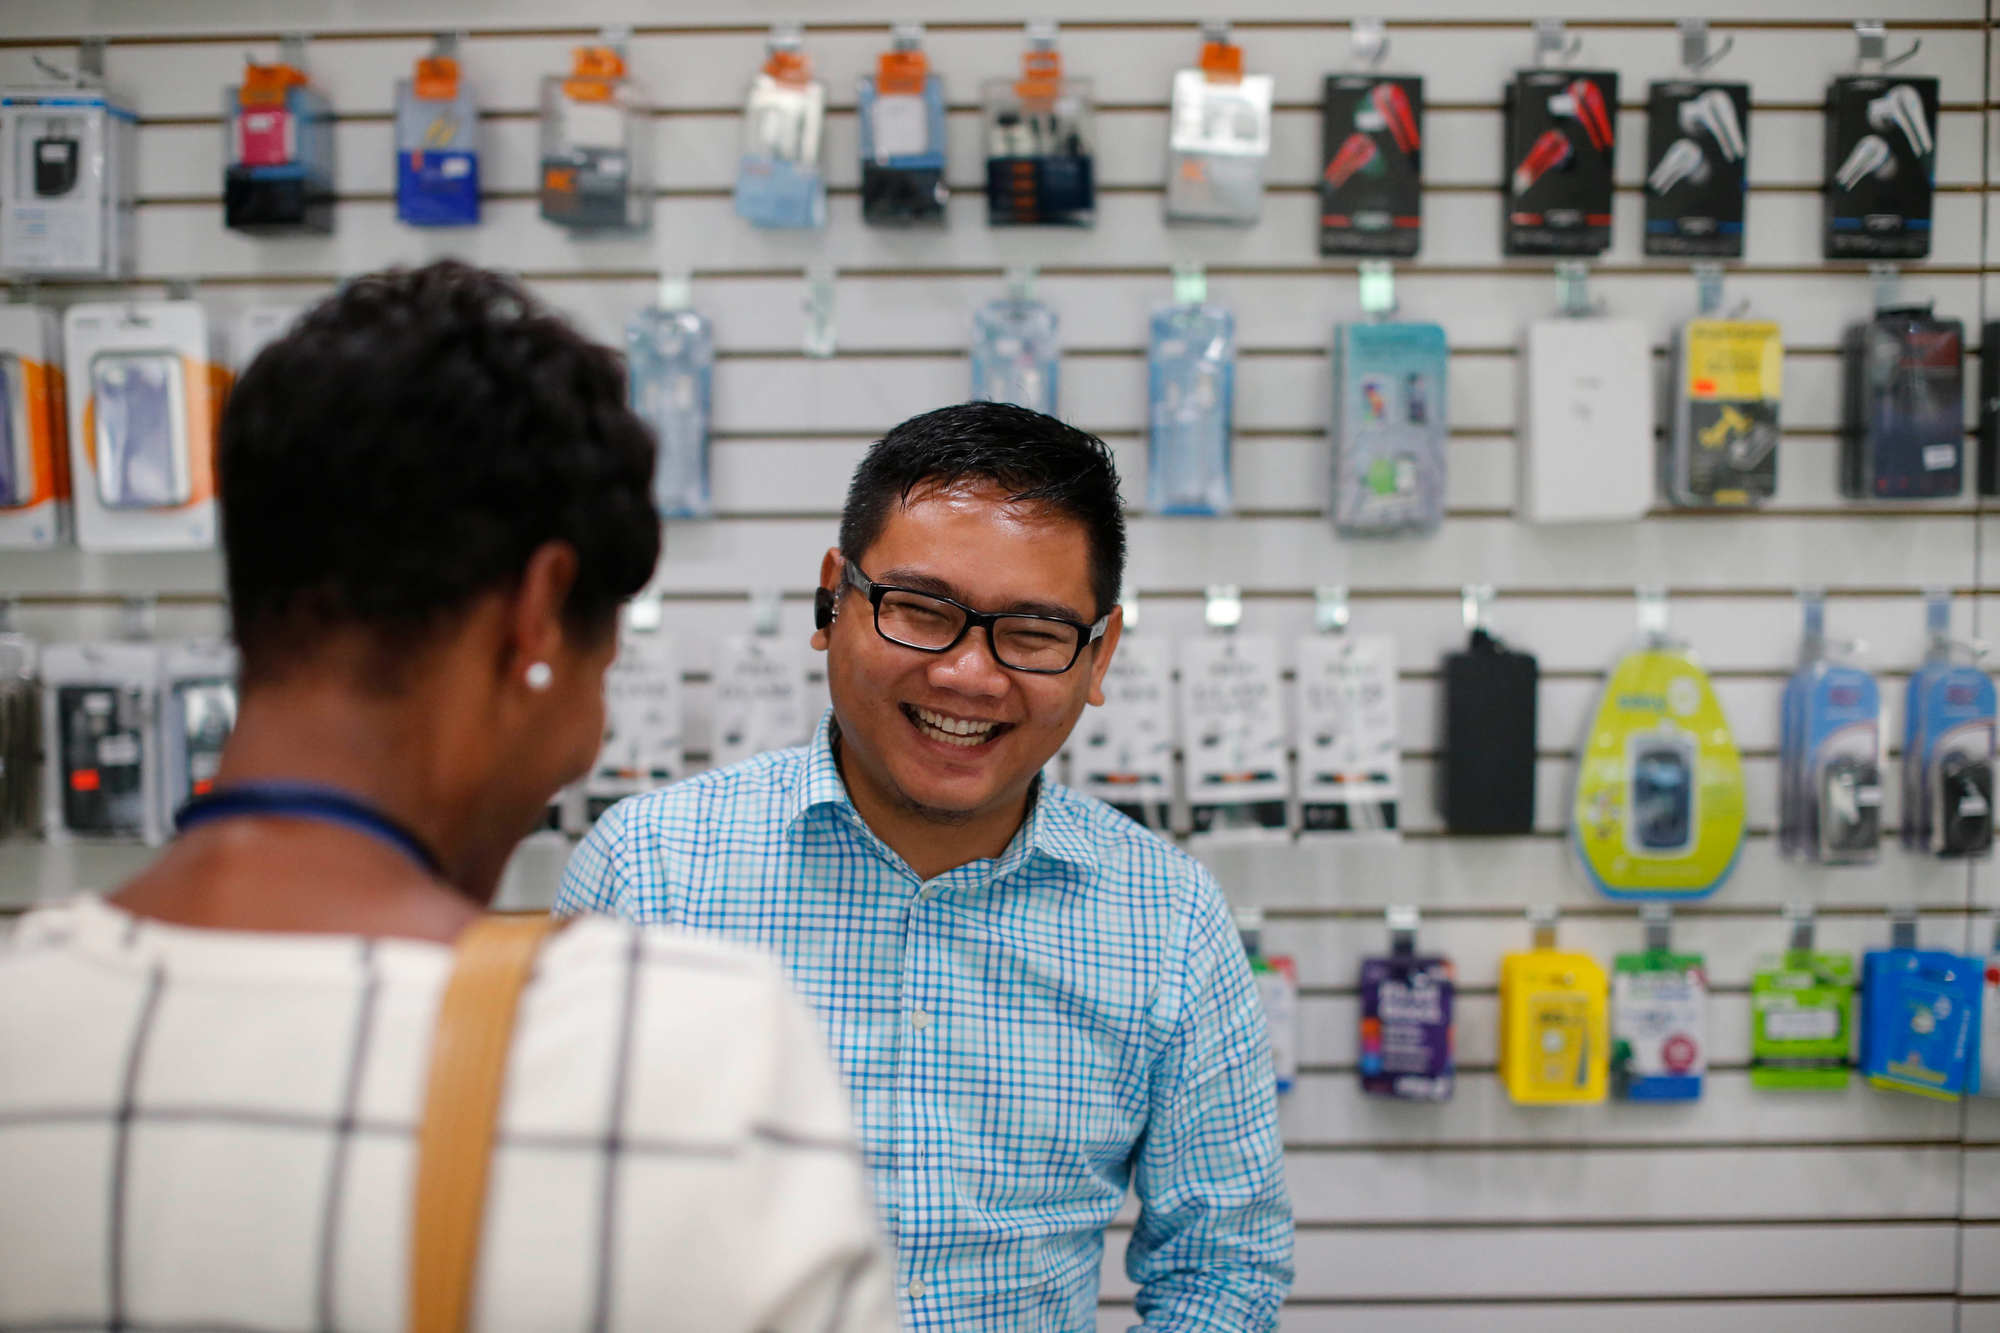 Aung Kaung Myat helps a customer at the counter of his iT Garden store on Grant Street, Sept. 20, 2016. (Derek Gee/Buffalo News)